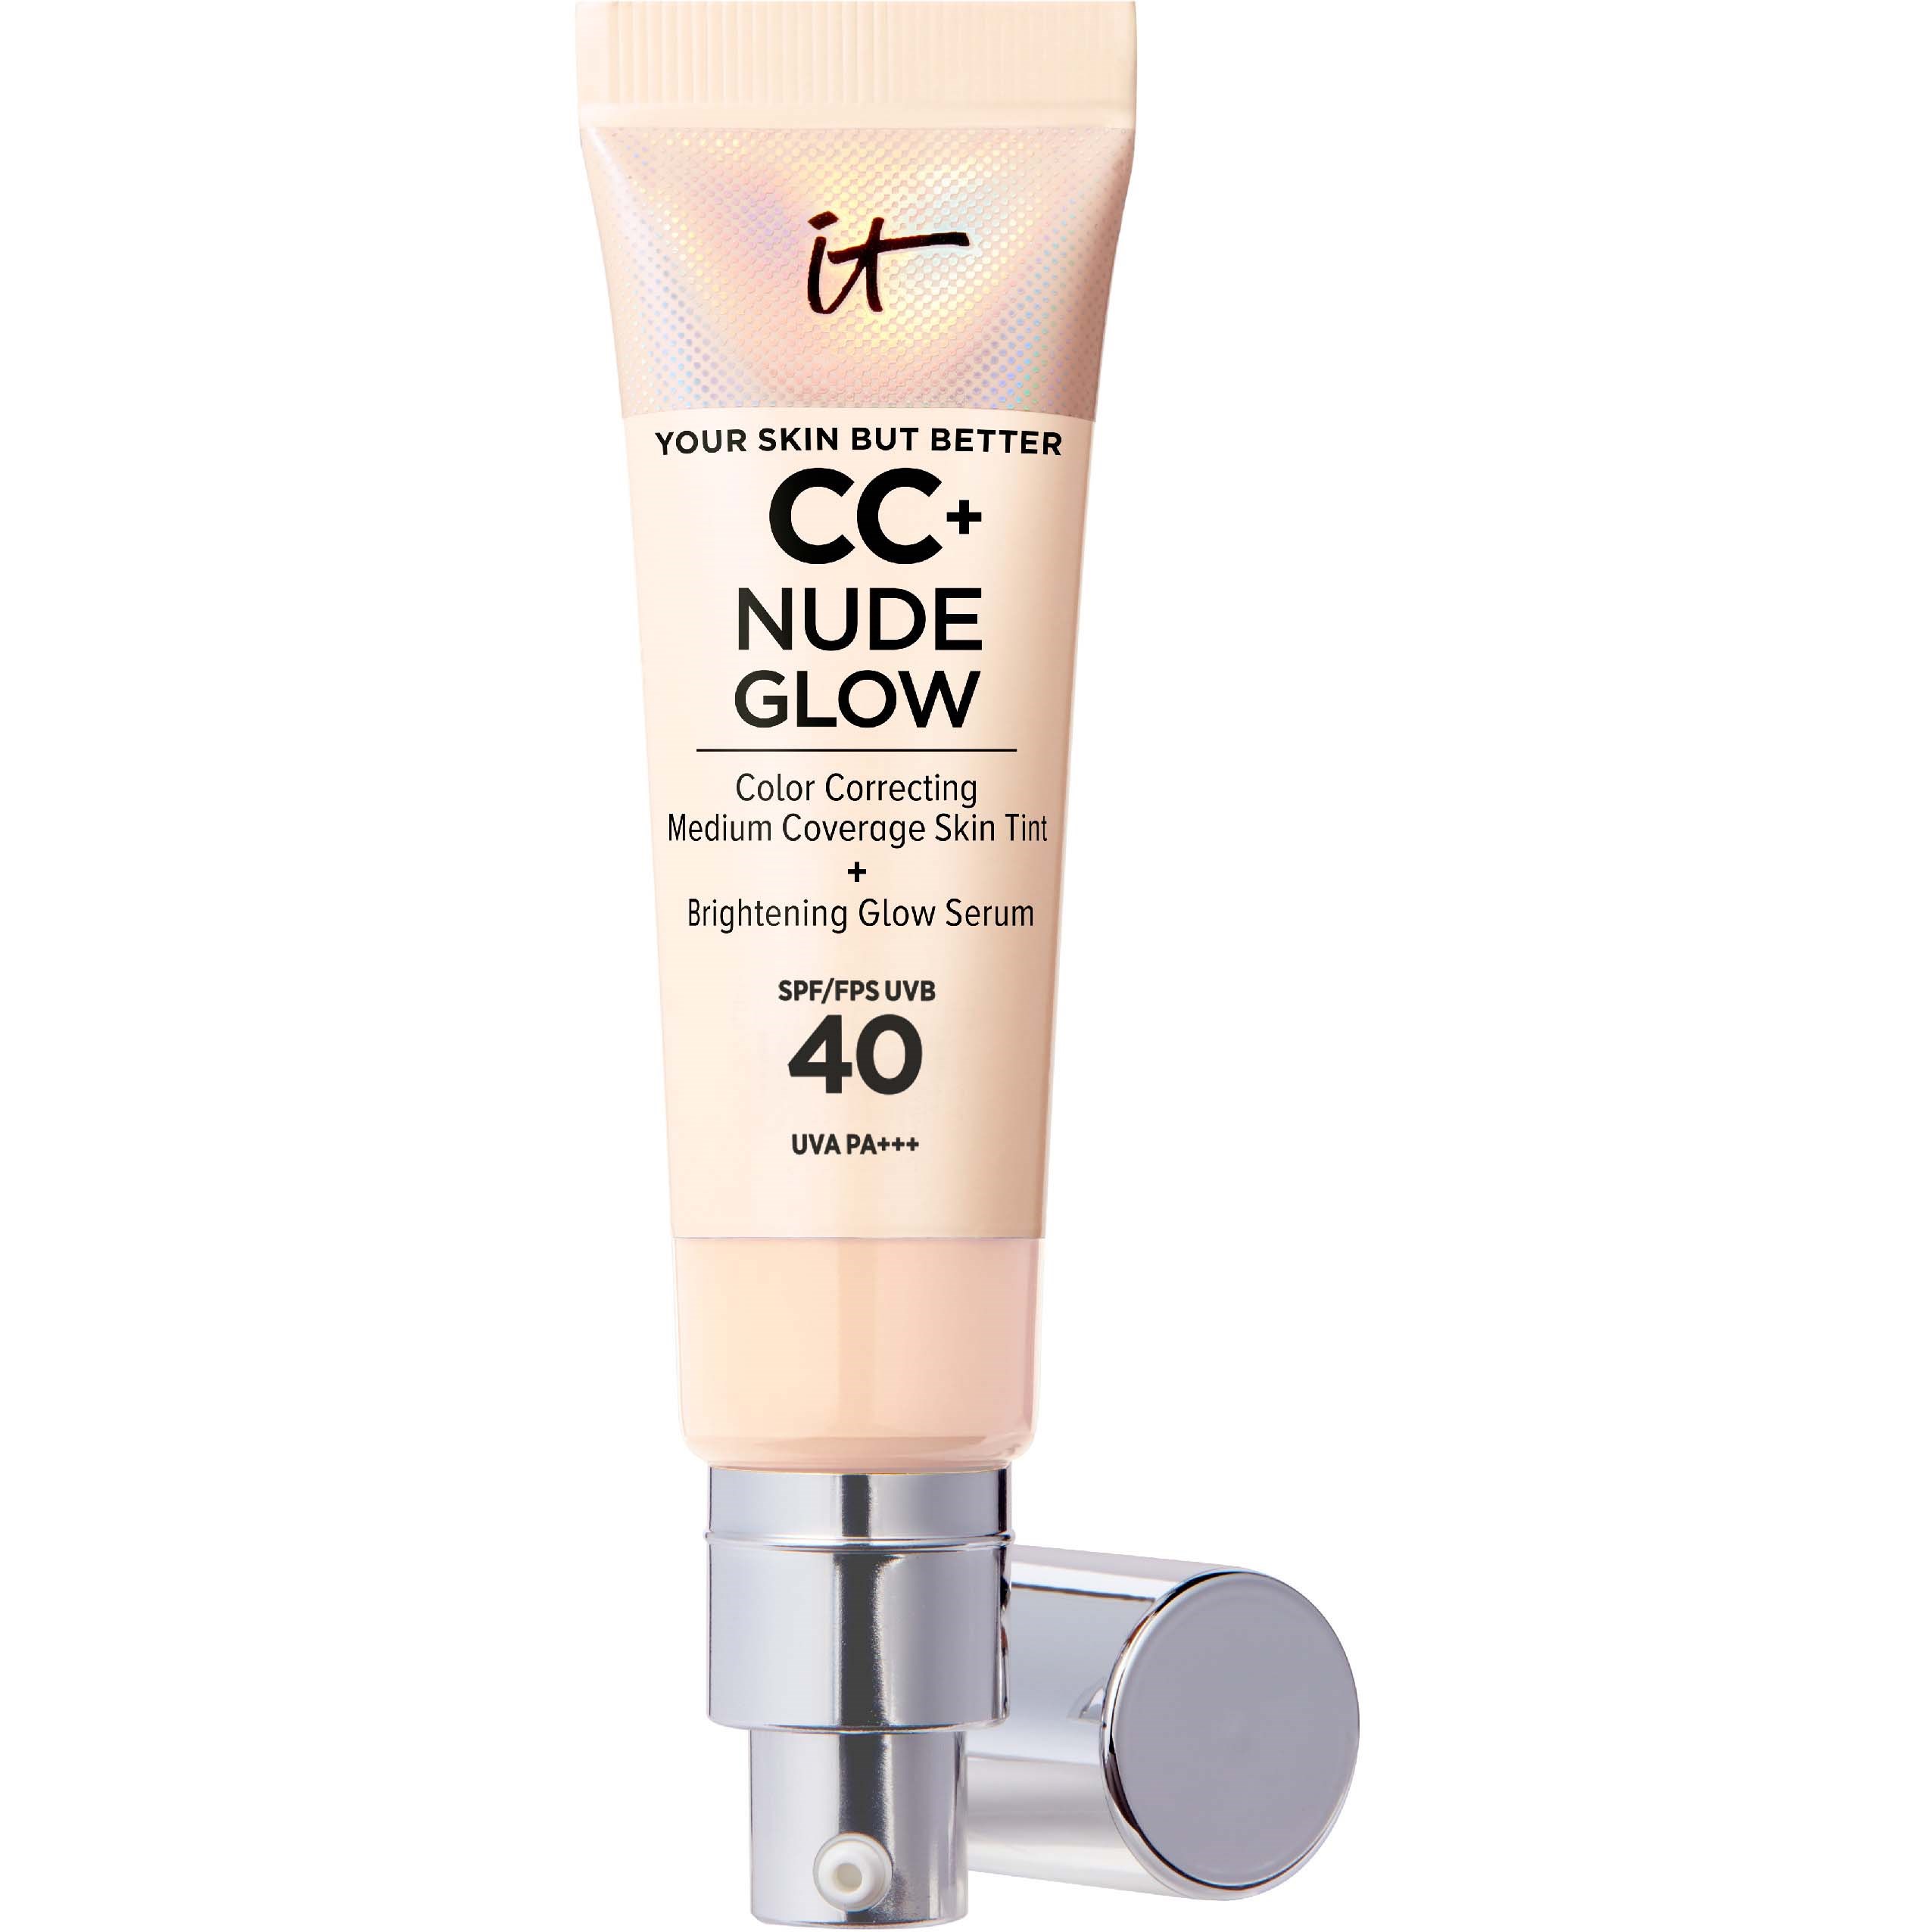 IT Cosmetics CC+ Nude Glow SPF 40 Fair Light